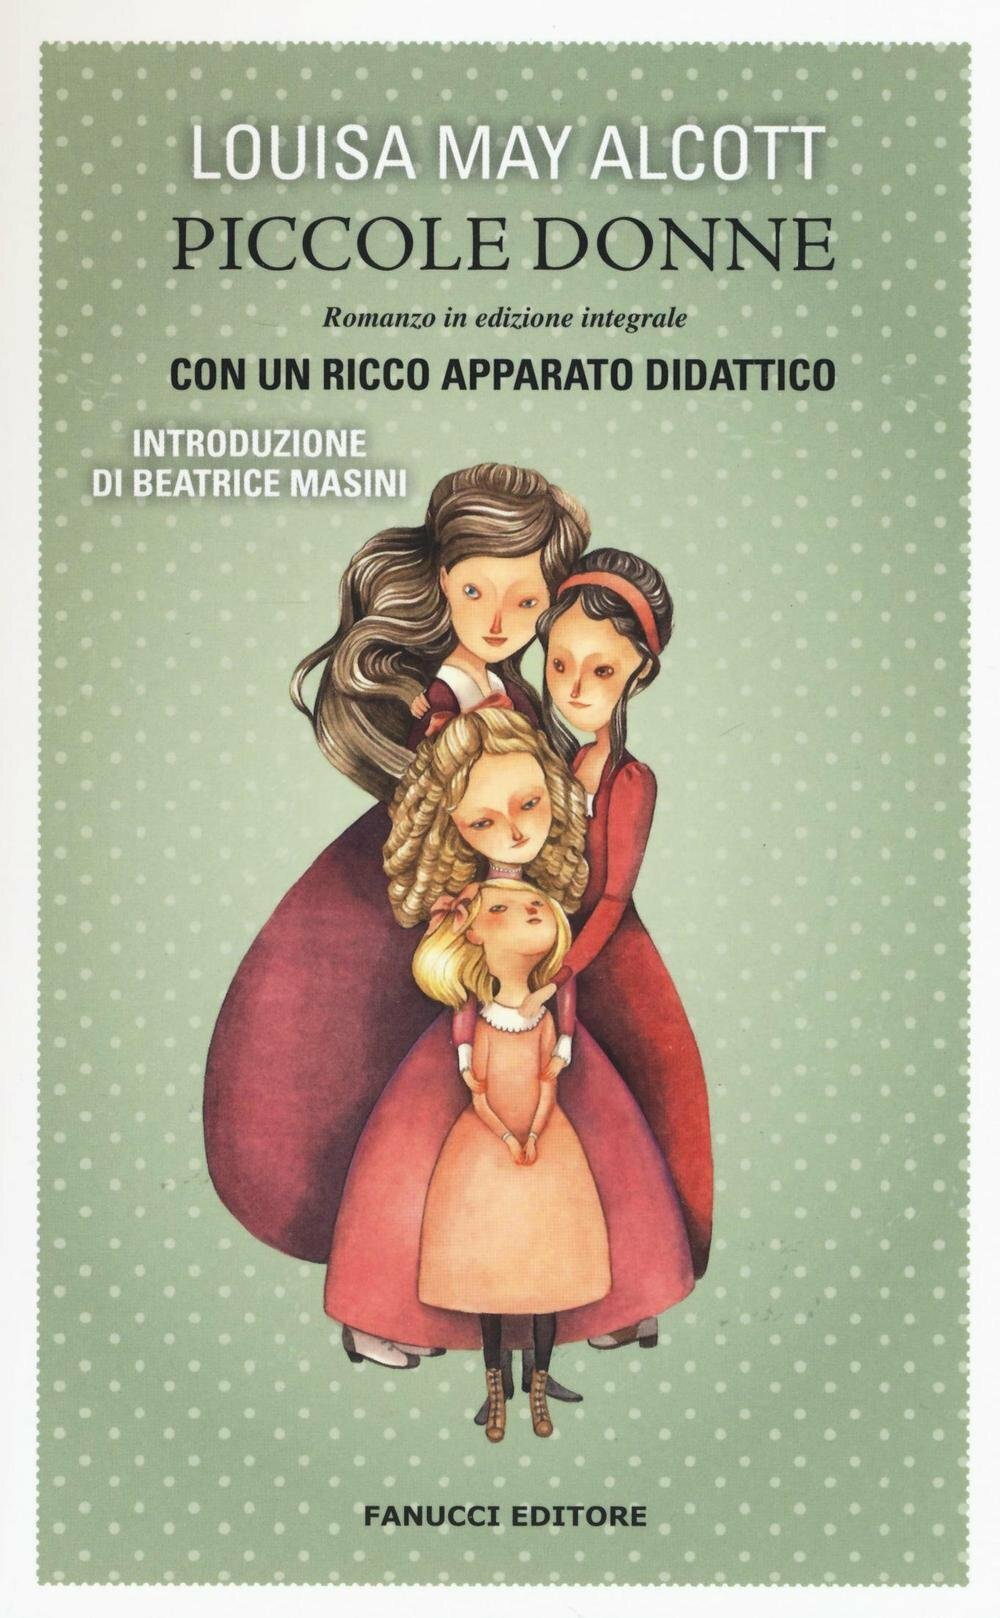 Copertina di Fanucci Editore per Piccole Donne